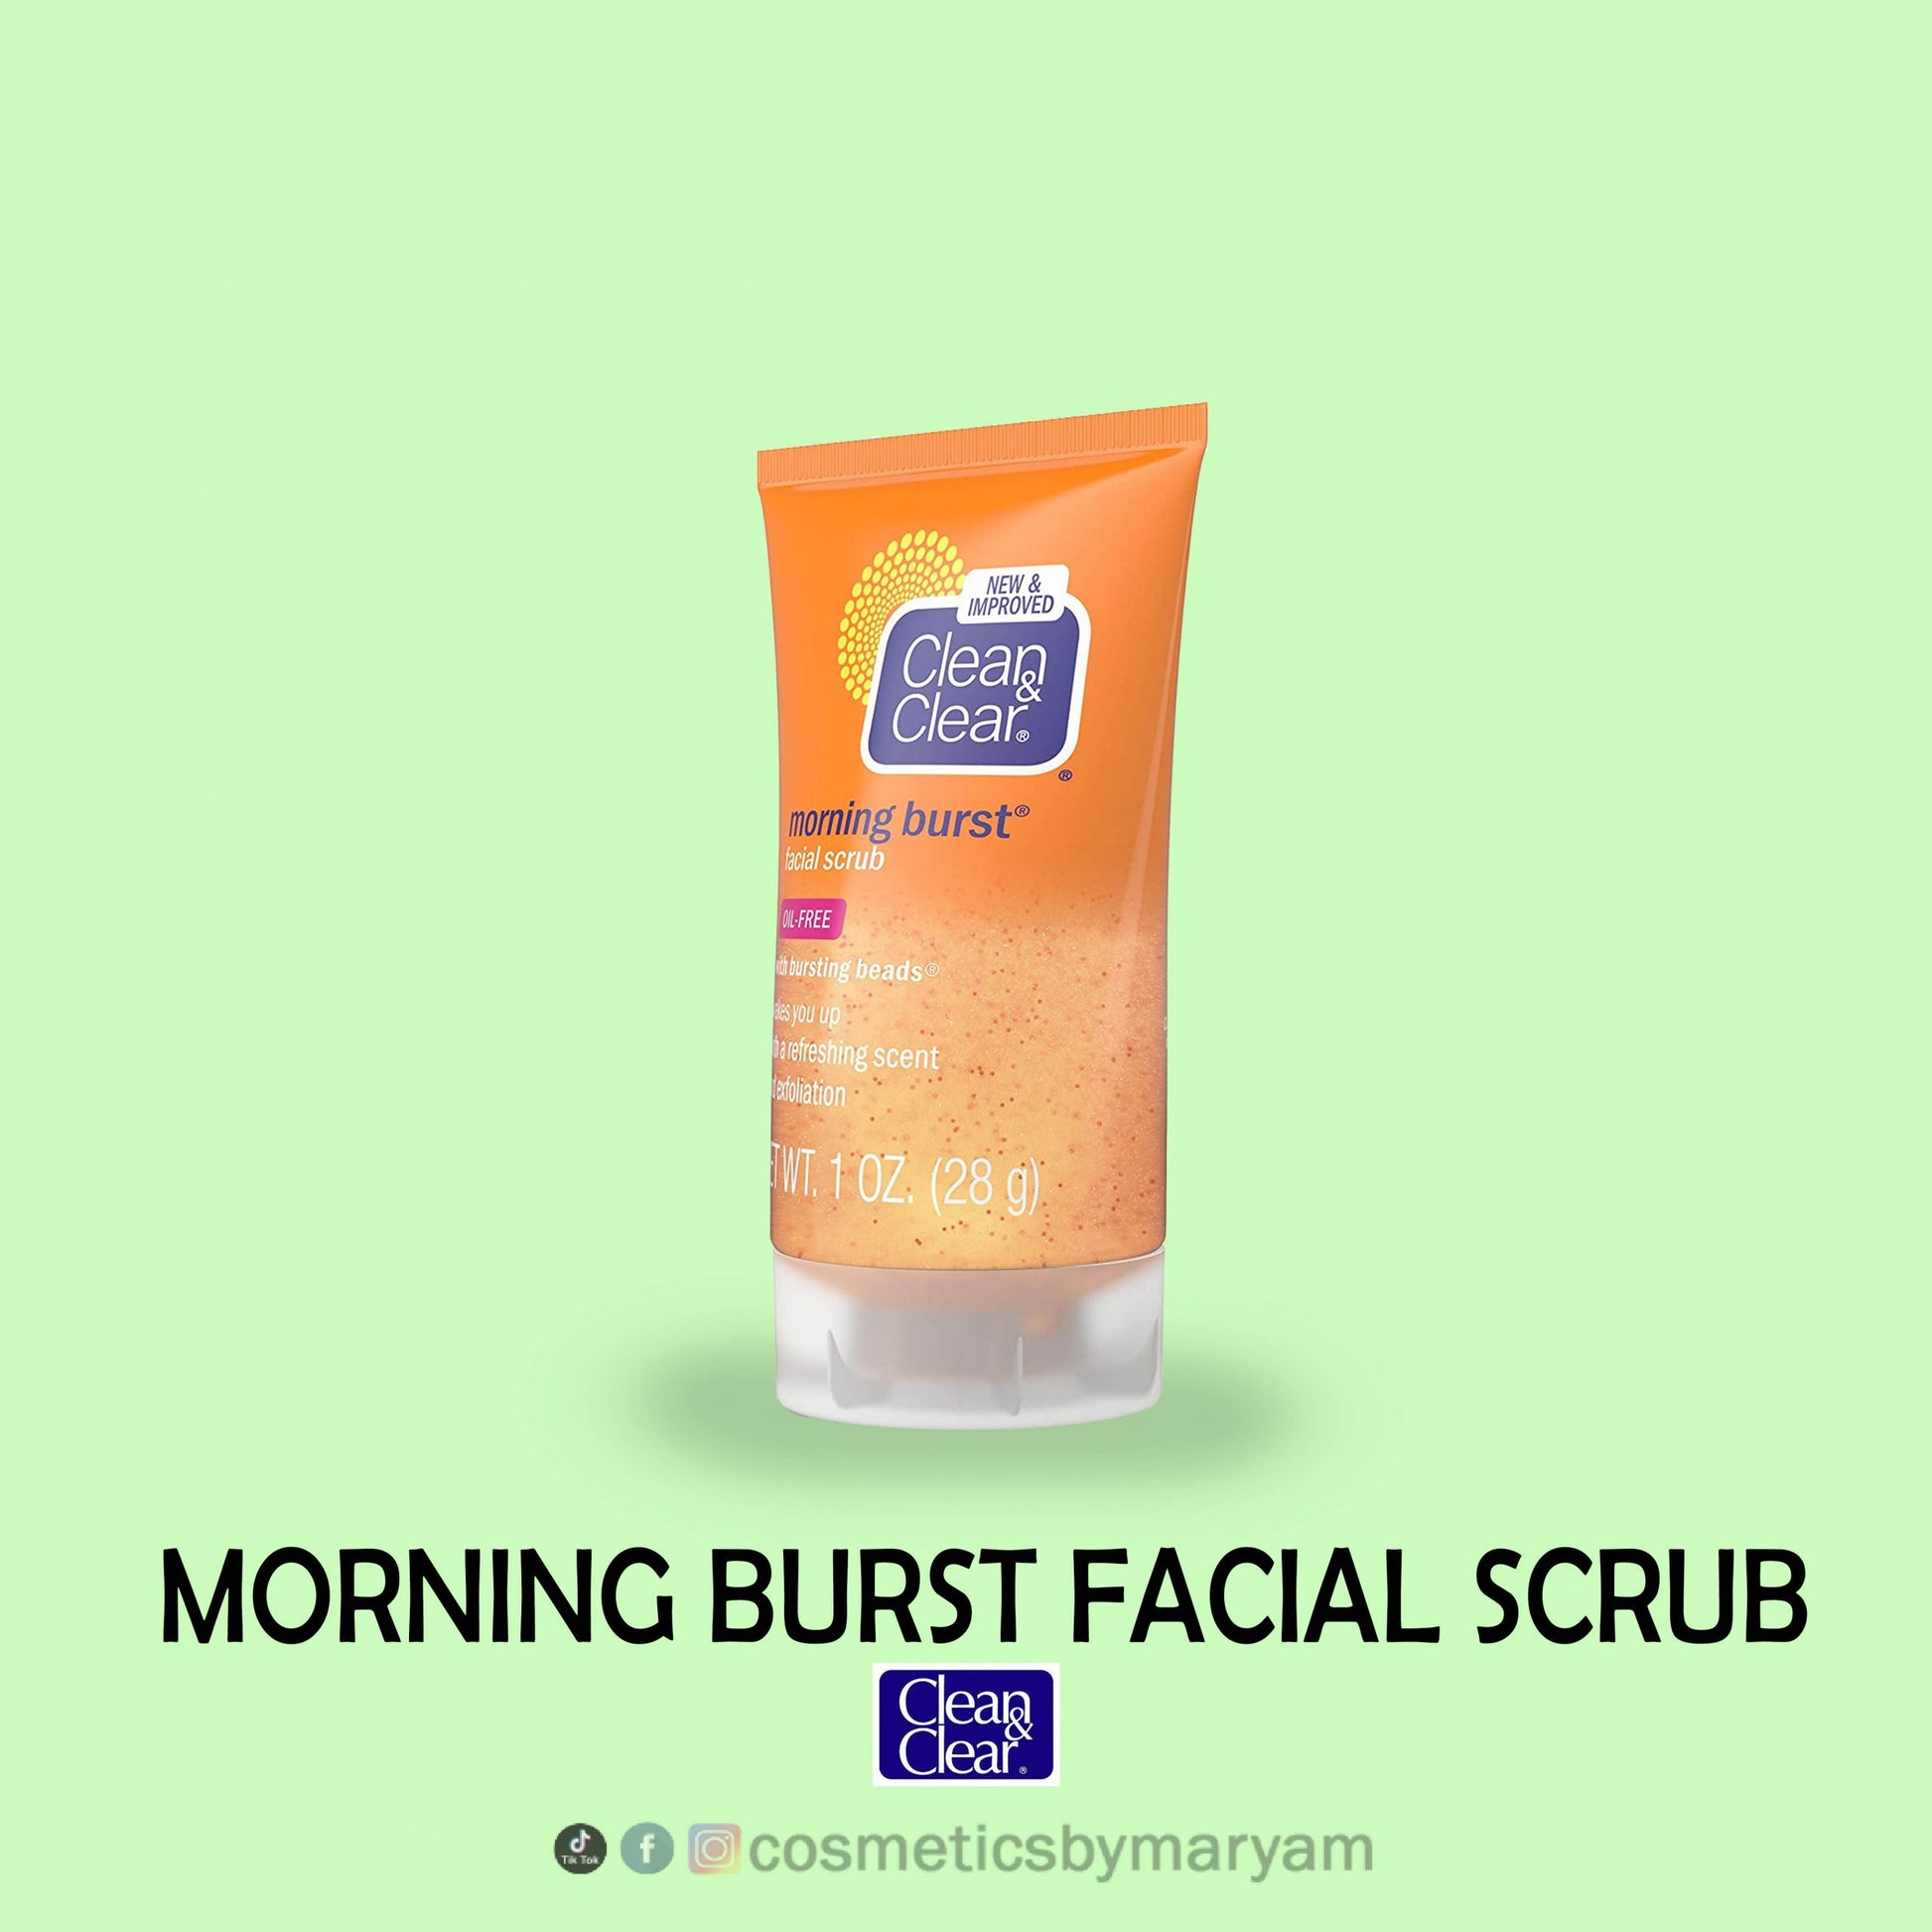 Clean & Clear Morning Burst Facial Cleanser - Shop Facial